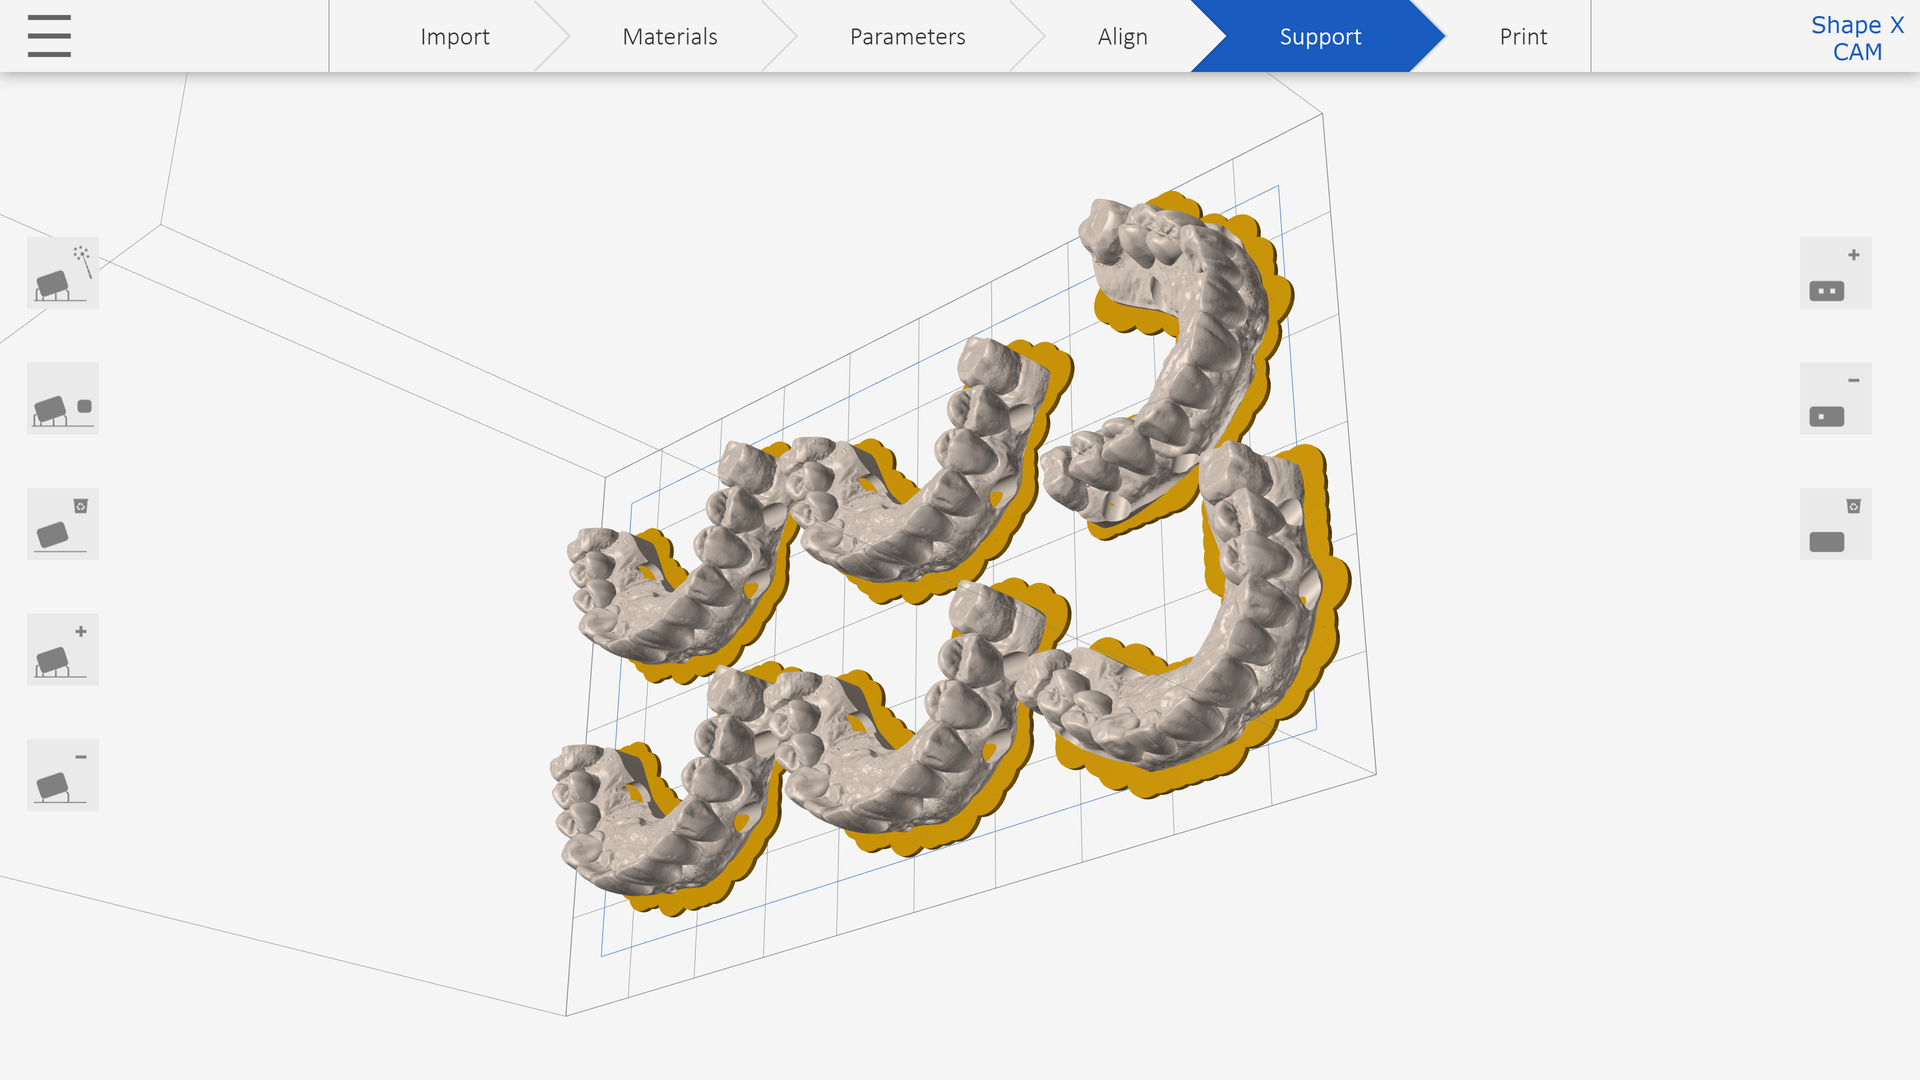 Dental 3D Printing Software - Shape X CAM